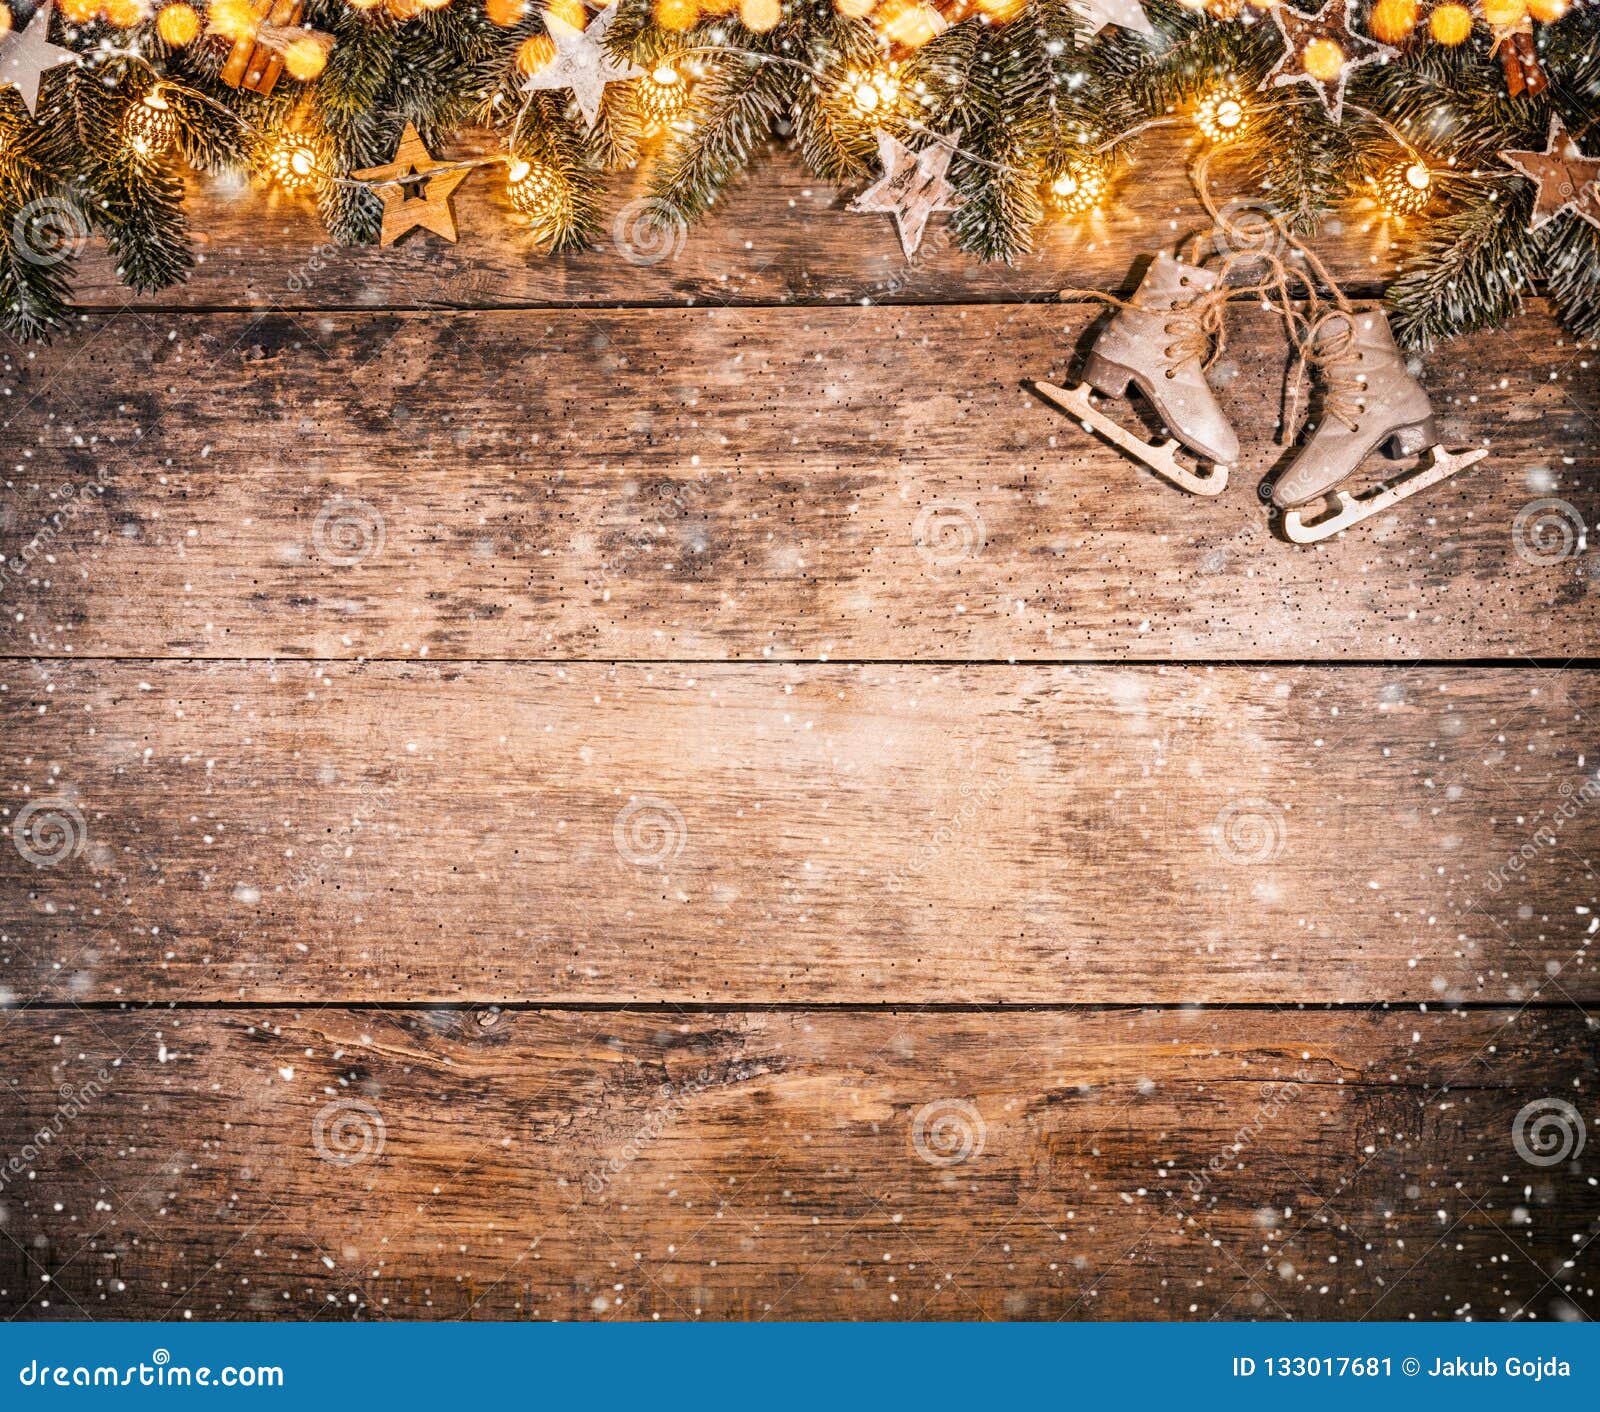 Decorative Christmas Rustic Background Stock Image - Image of ...